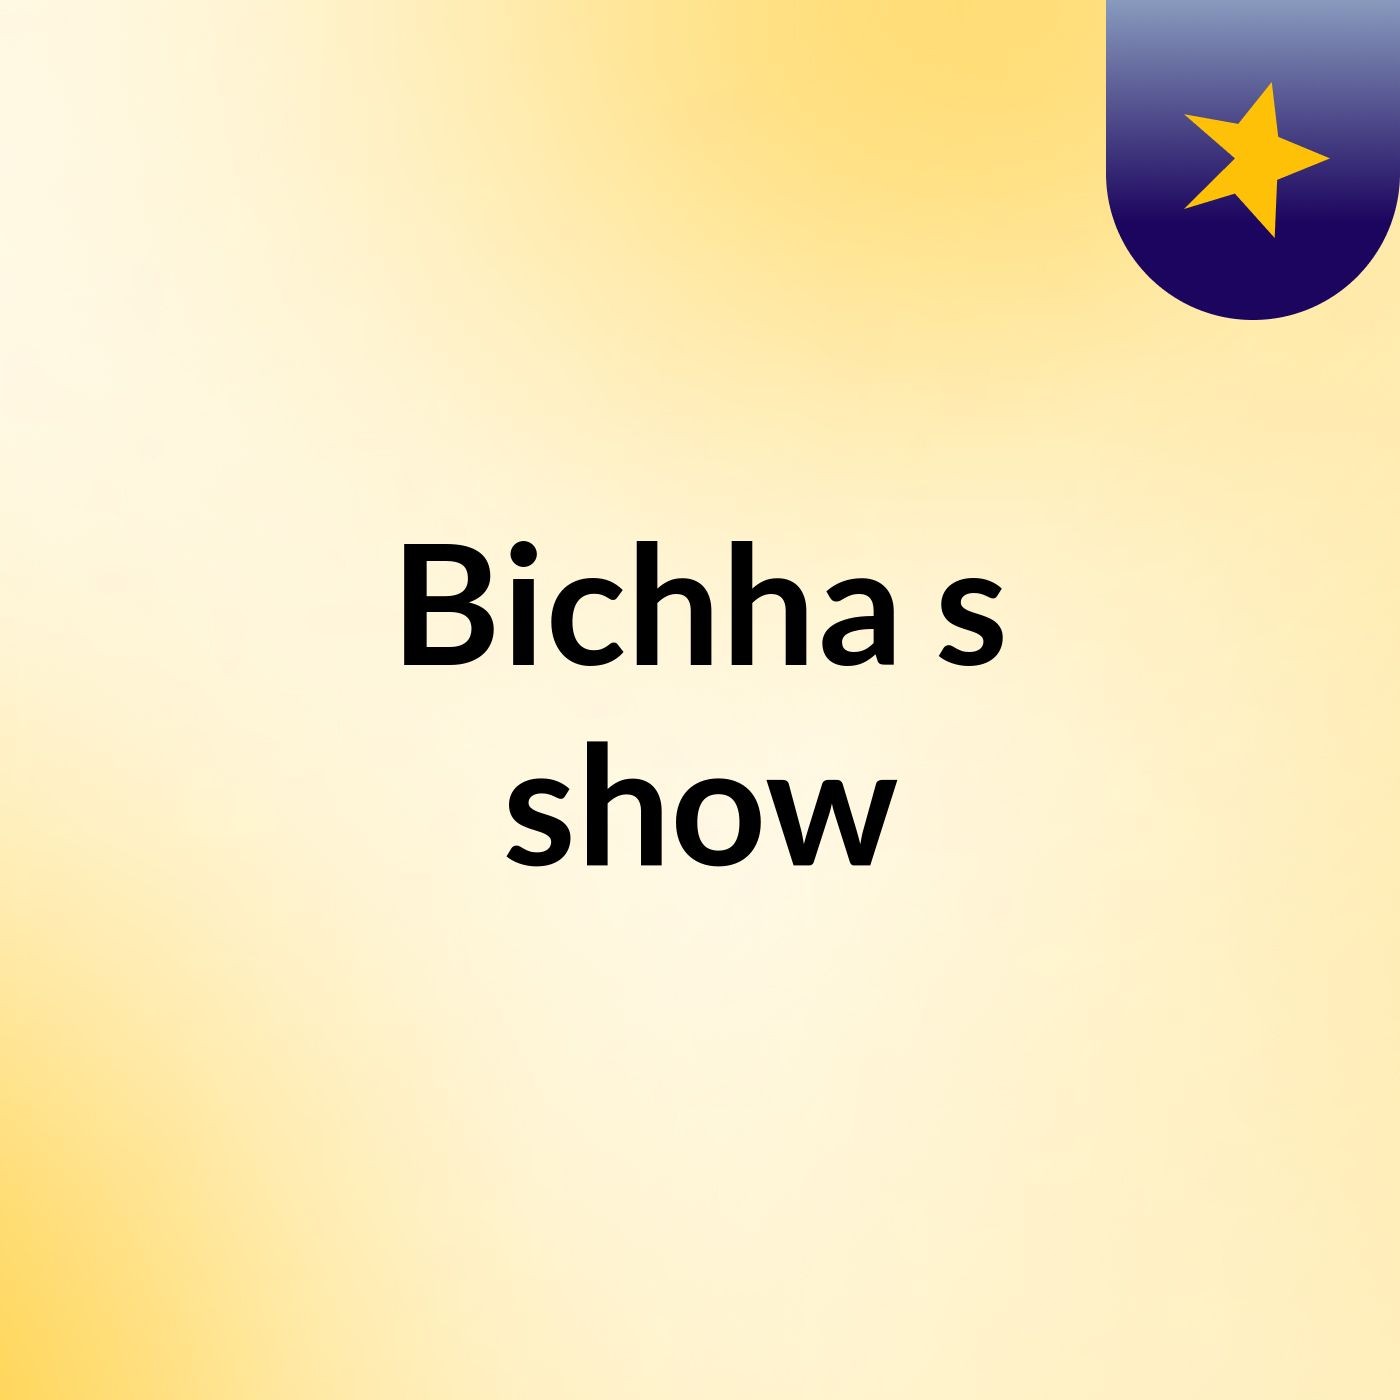 Bichha's show